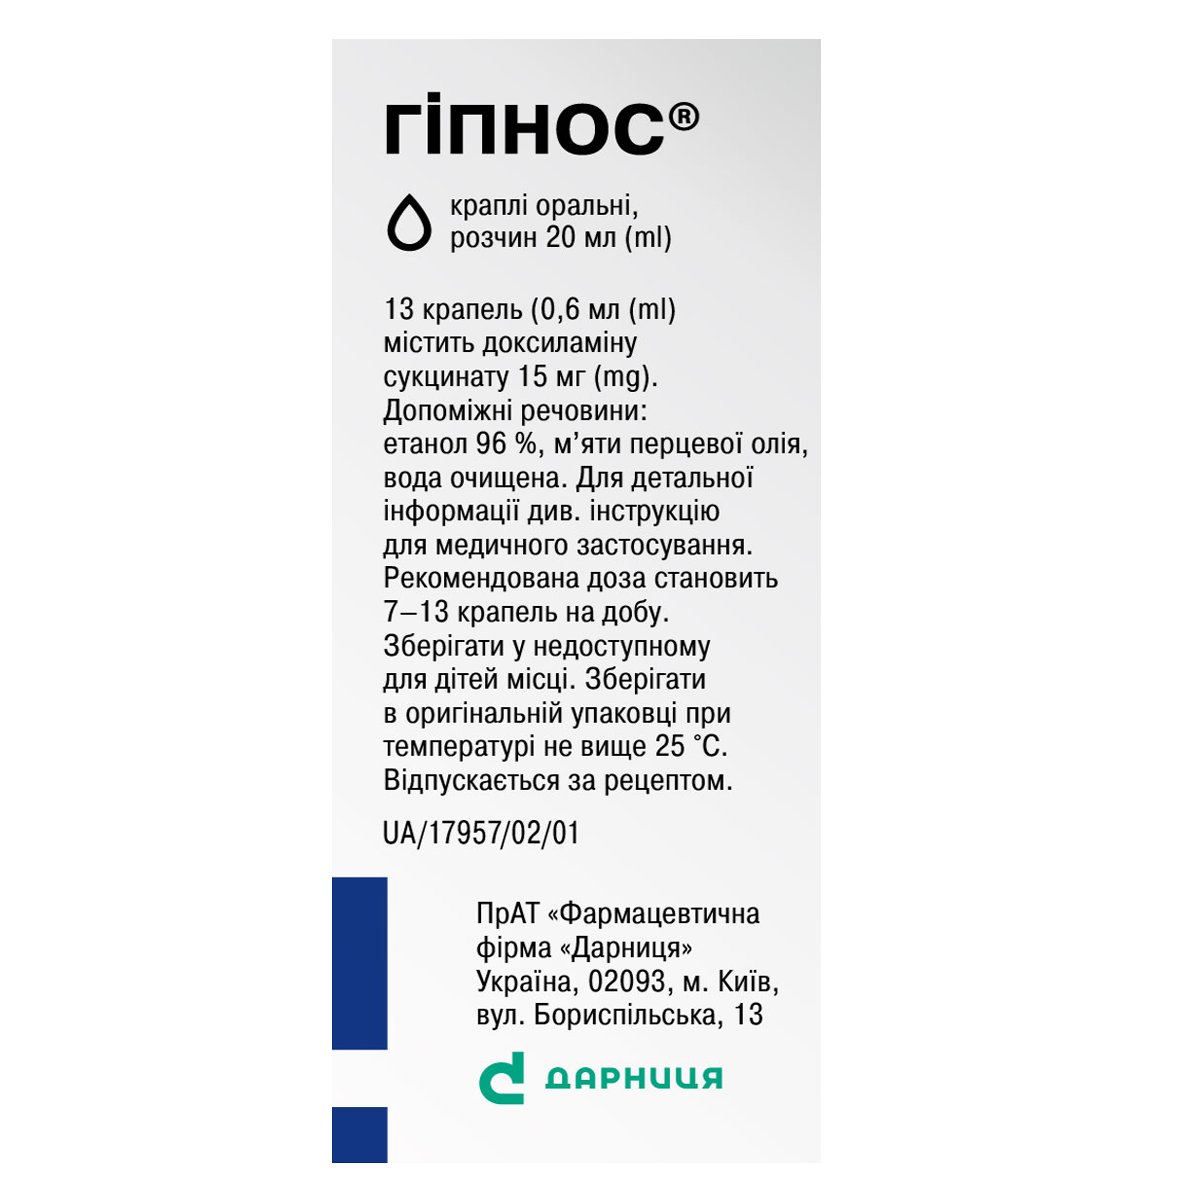 Hipnos manufacturer "Darnytsia" pharmaceutical company